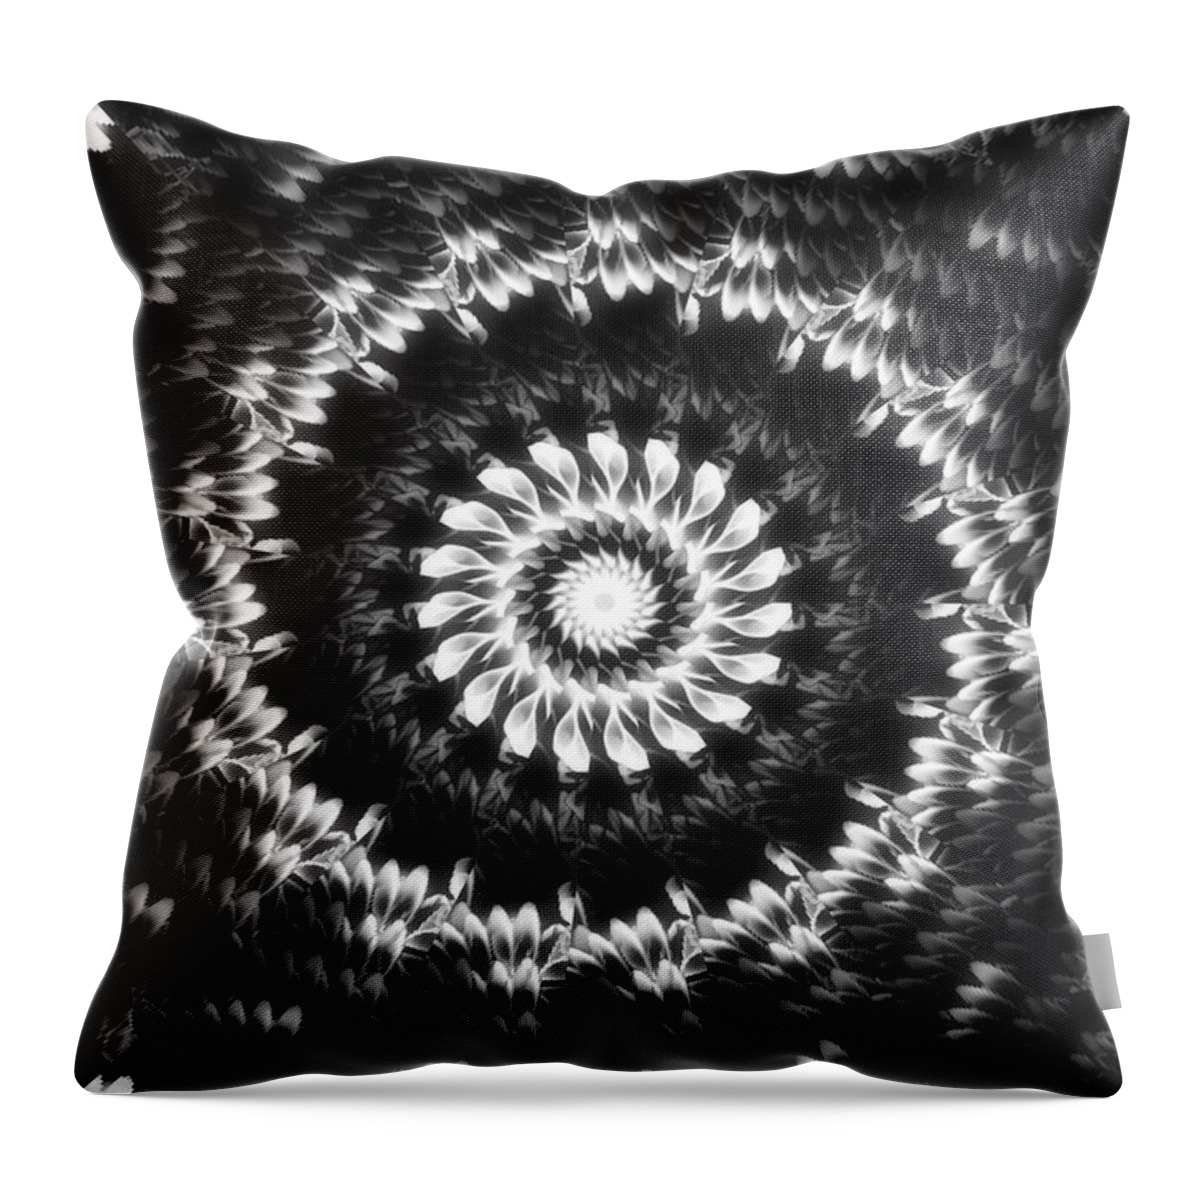 Mandala Throw Pillow featuring the digital art Monochrome Petals Mandala by Mimulux Patricia No